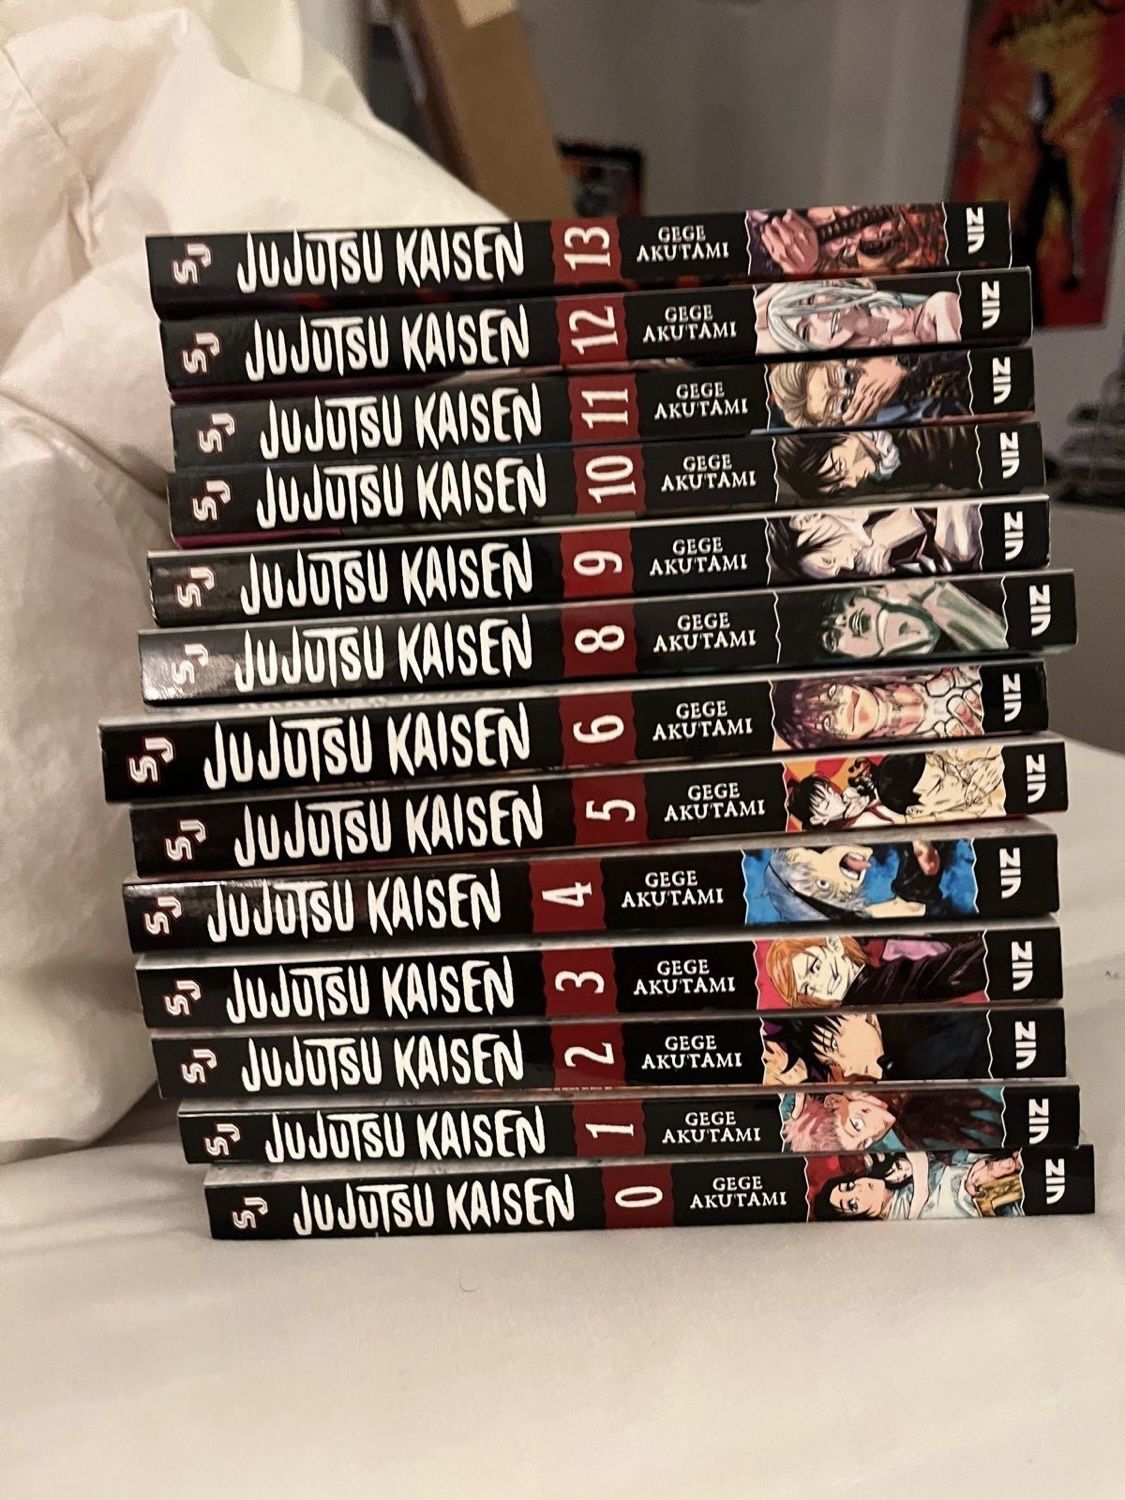 jujutsu kaisen mangas vol. 0-13 (not including vol. 7)